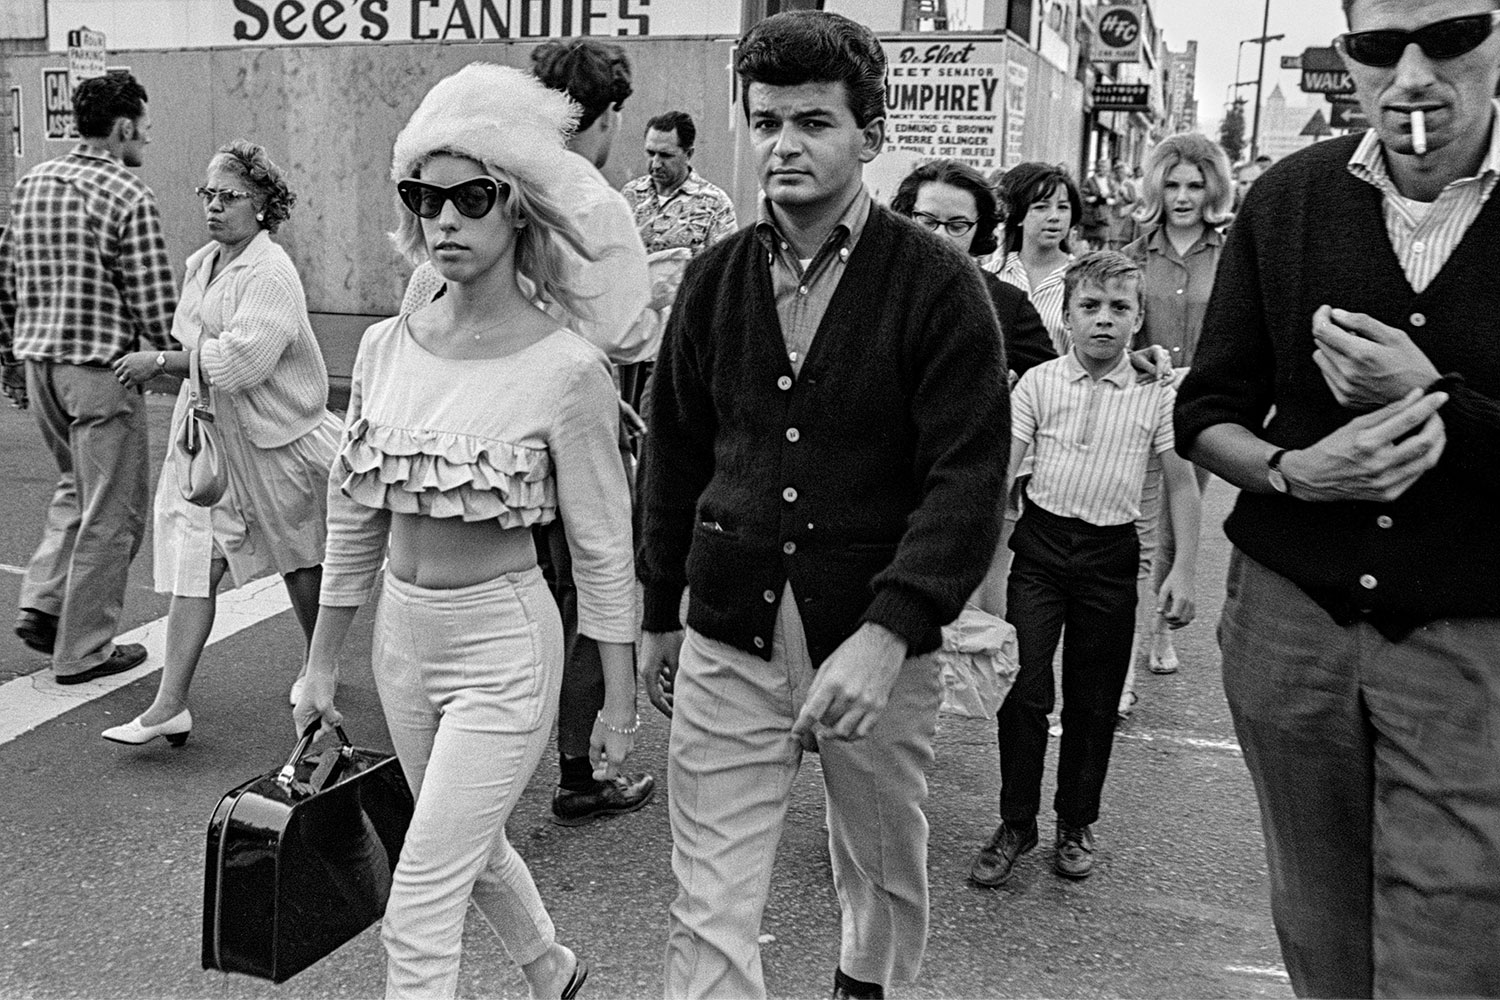   Strutting down Hollywood Boulevard, 1964  